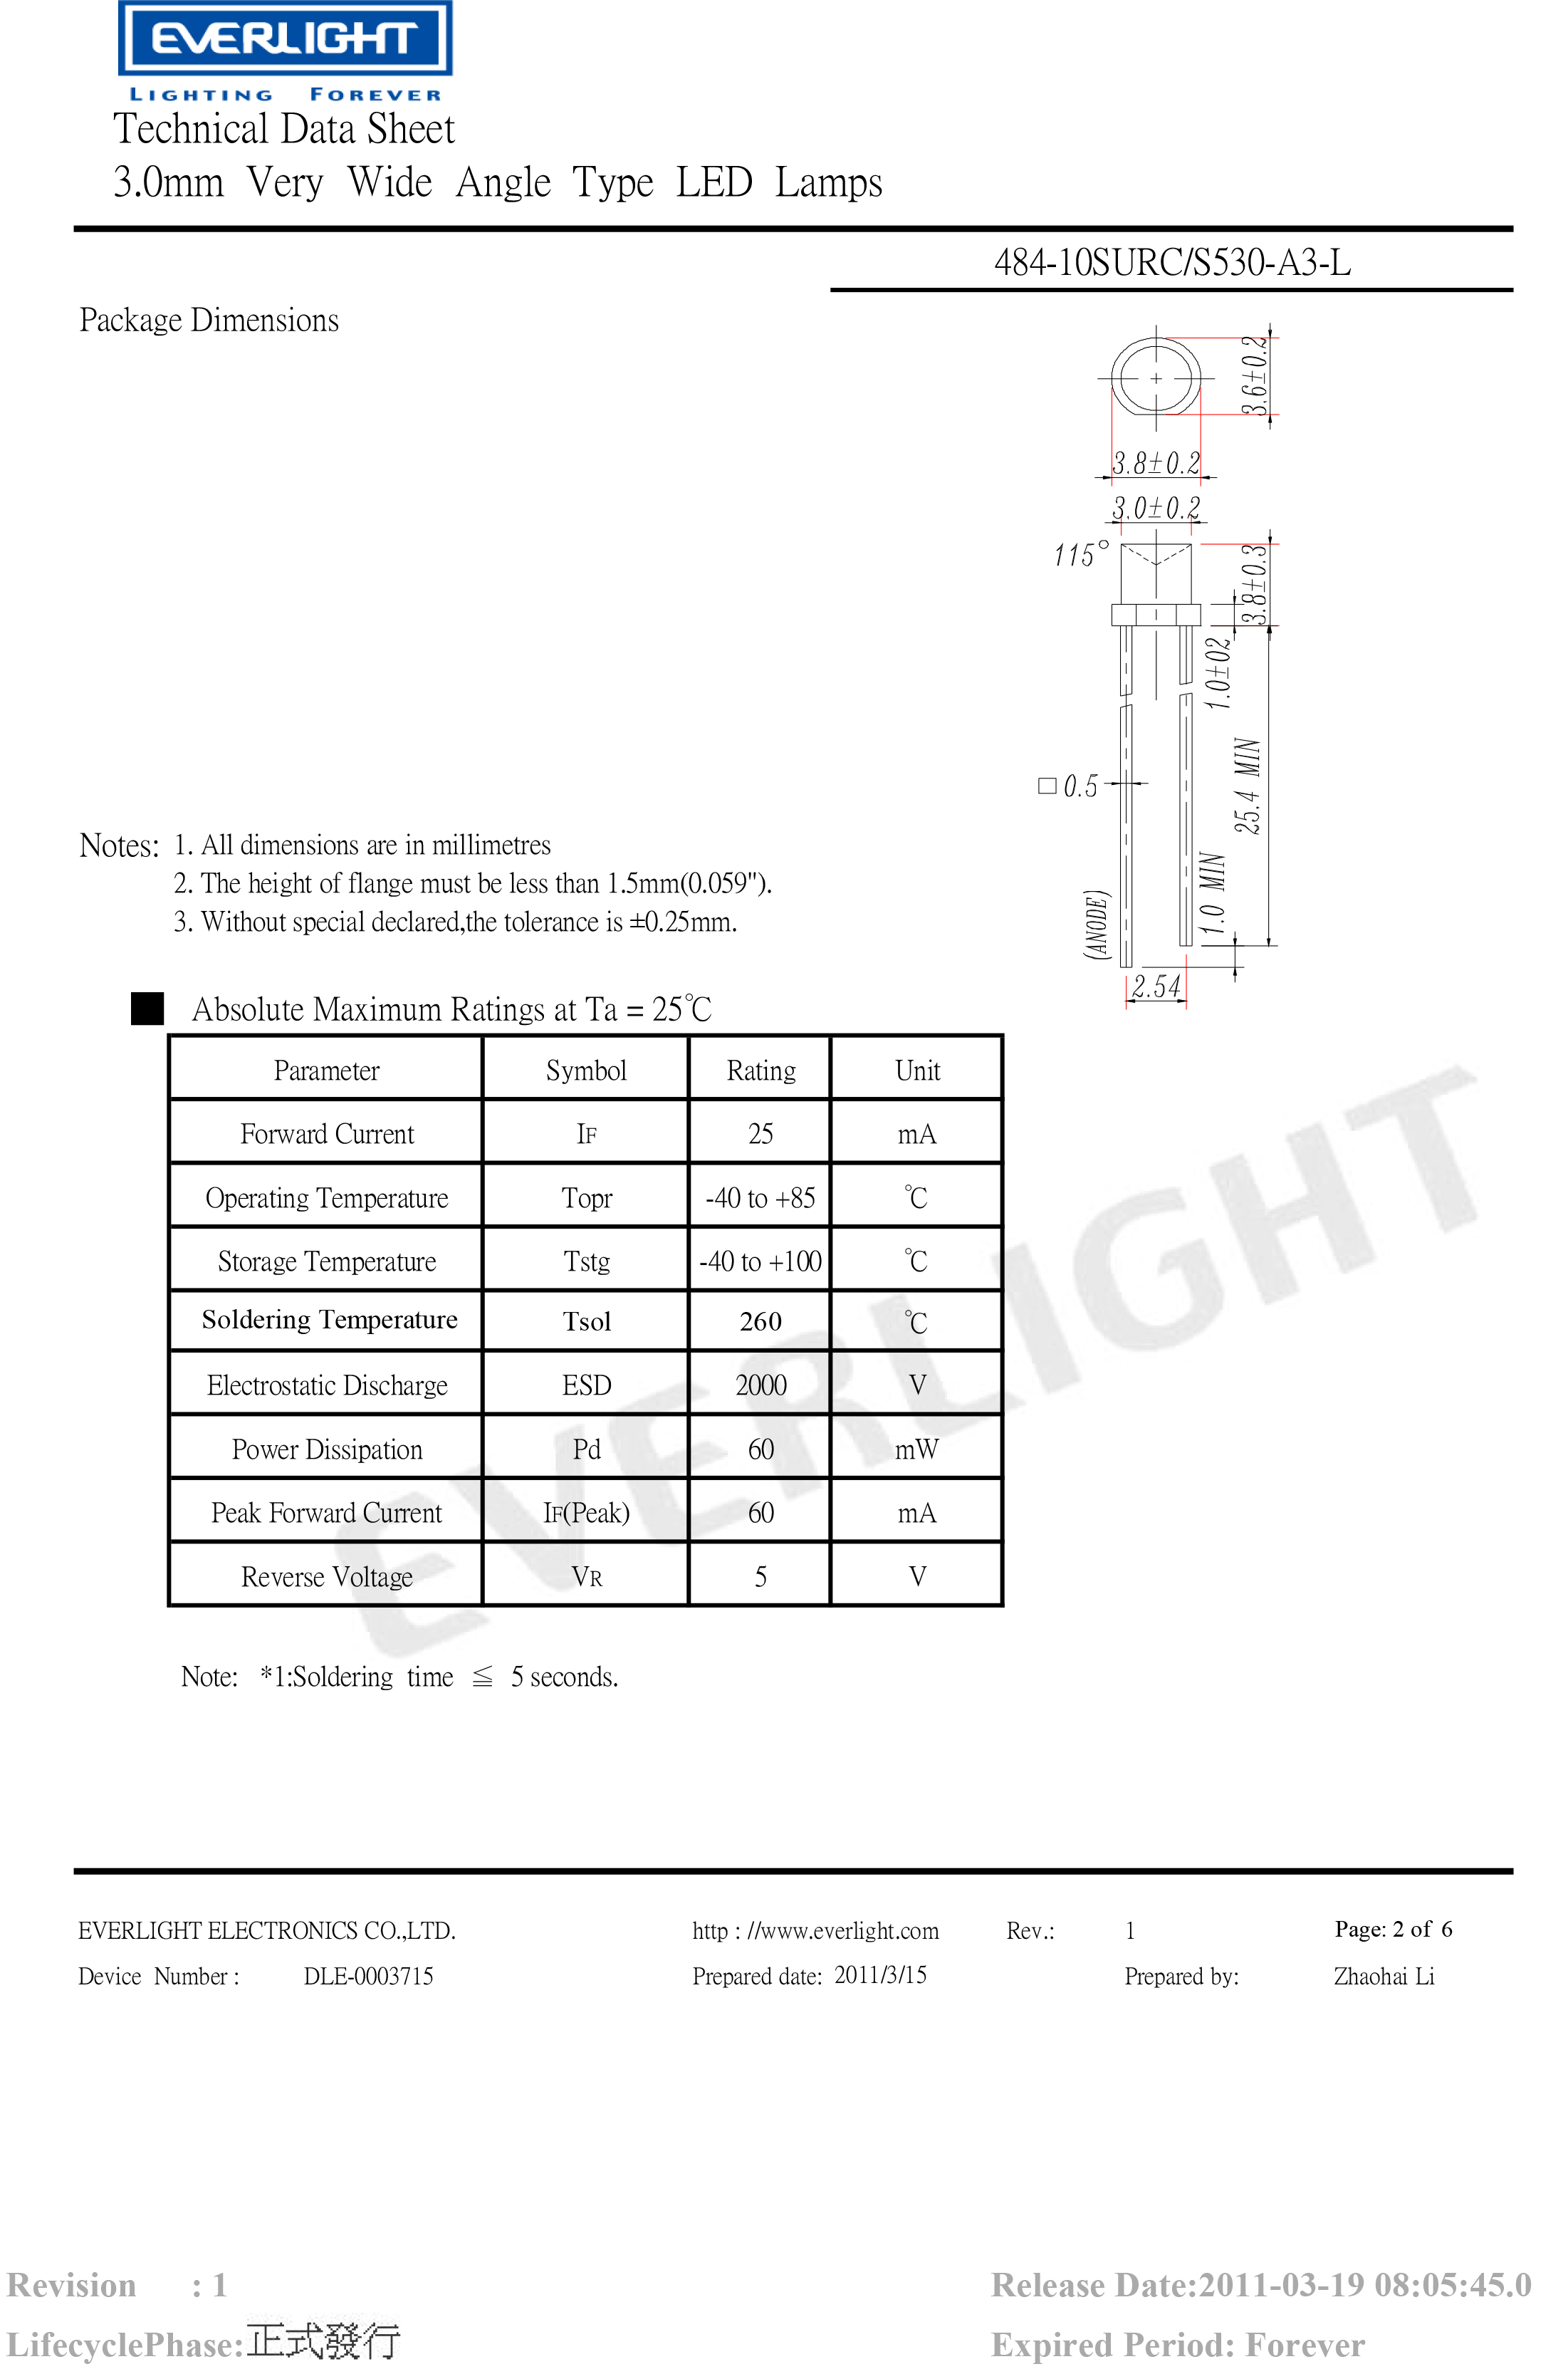 everlight led 3mm lamp 484-10SURC/S530-A3-L Datasheet